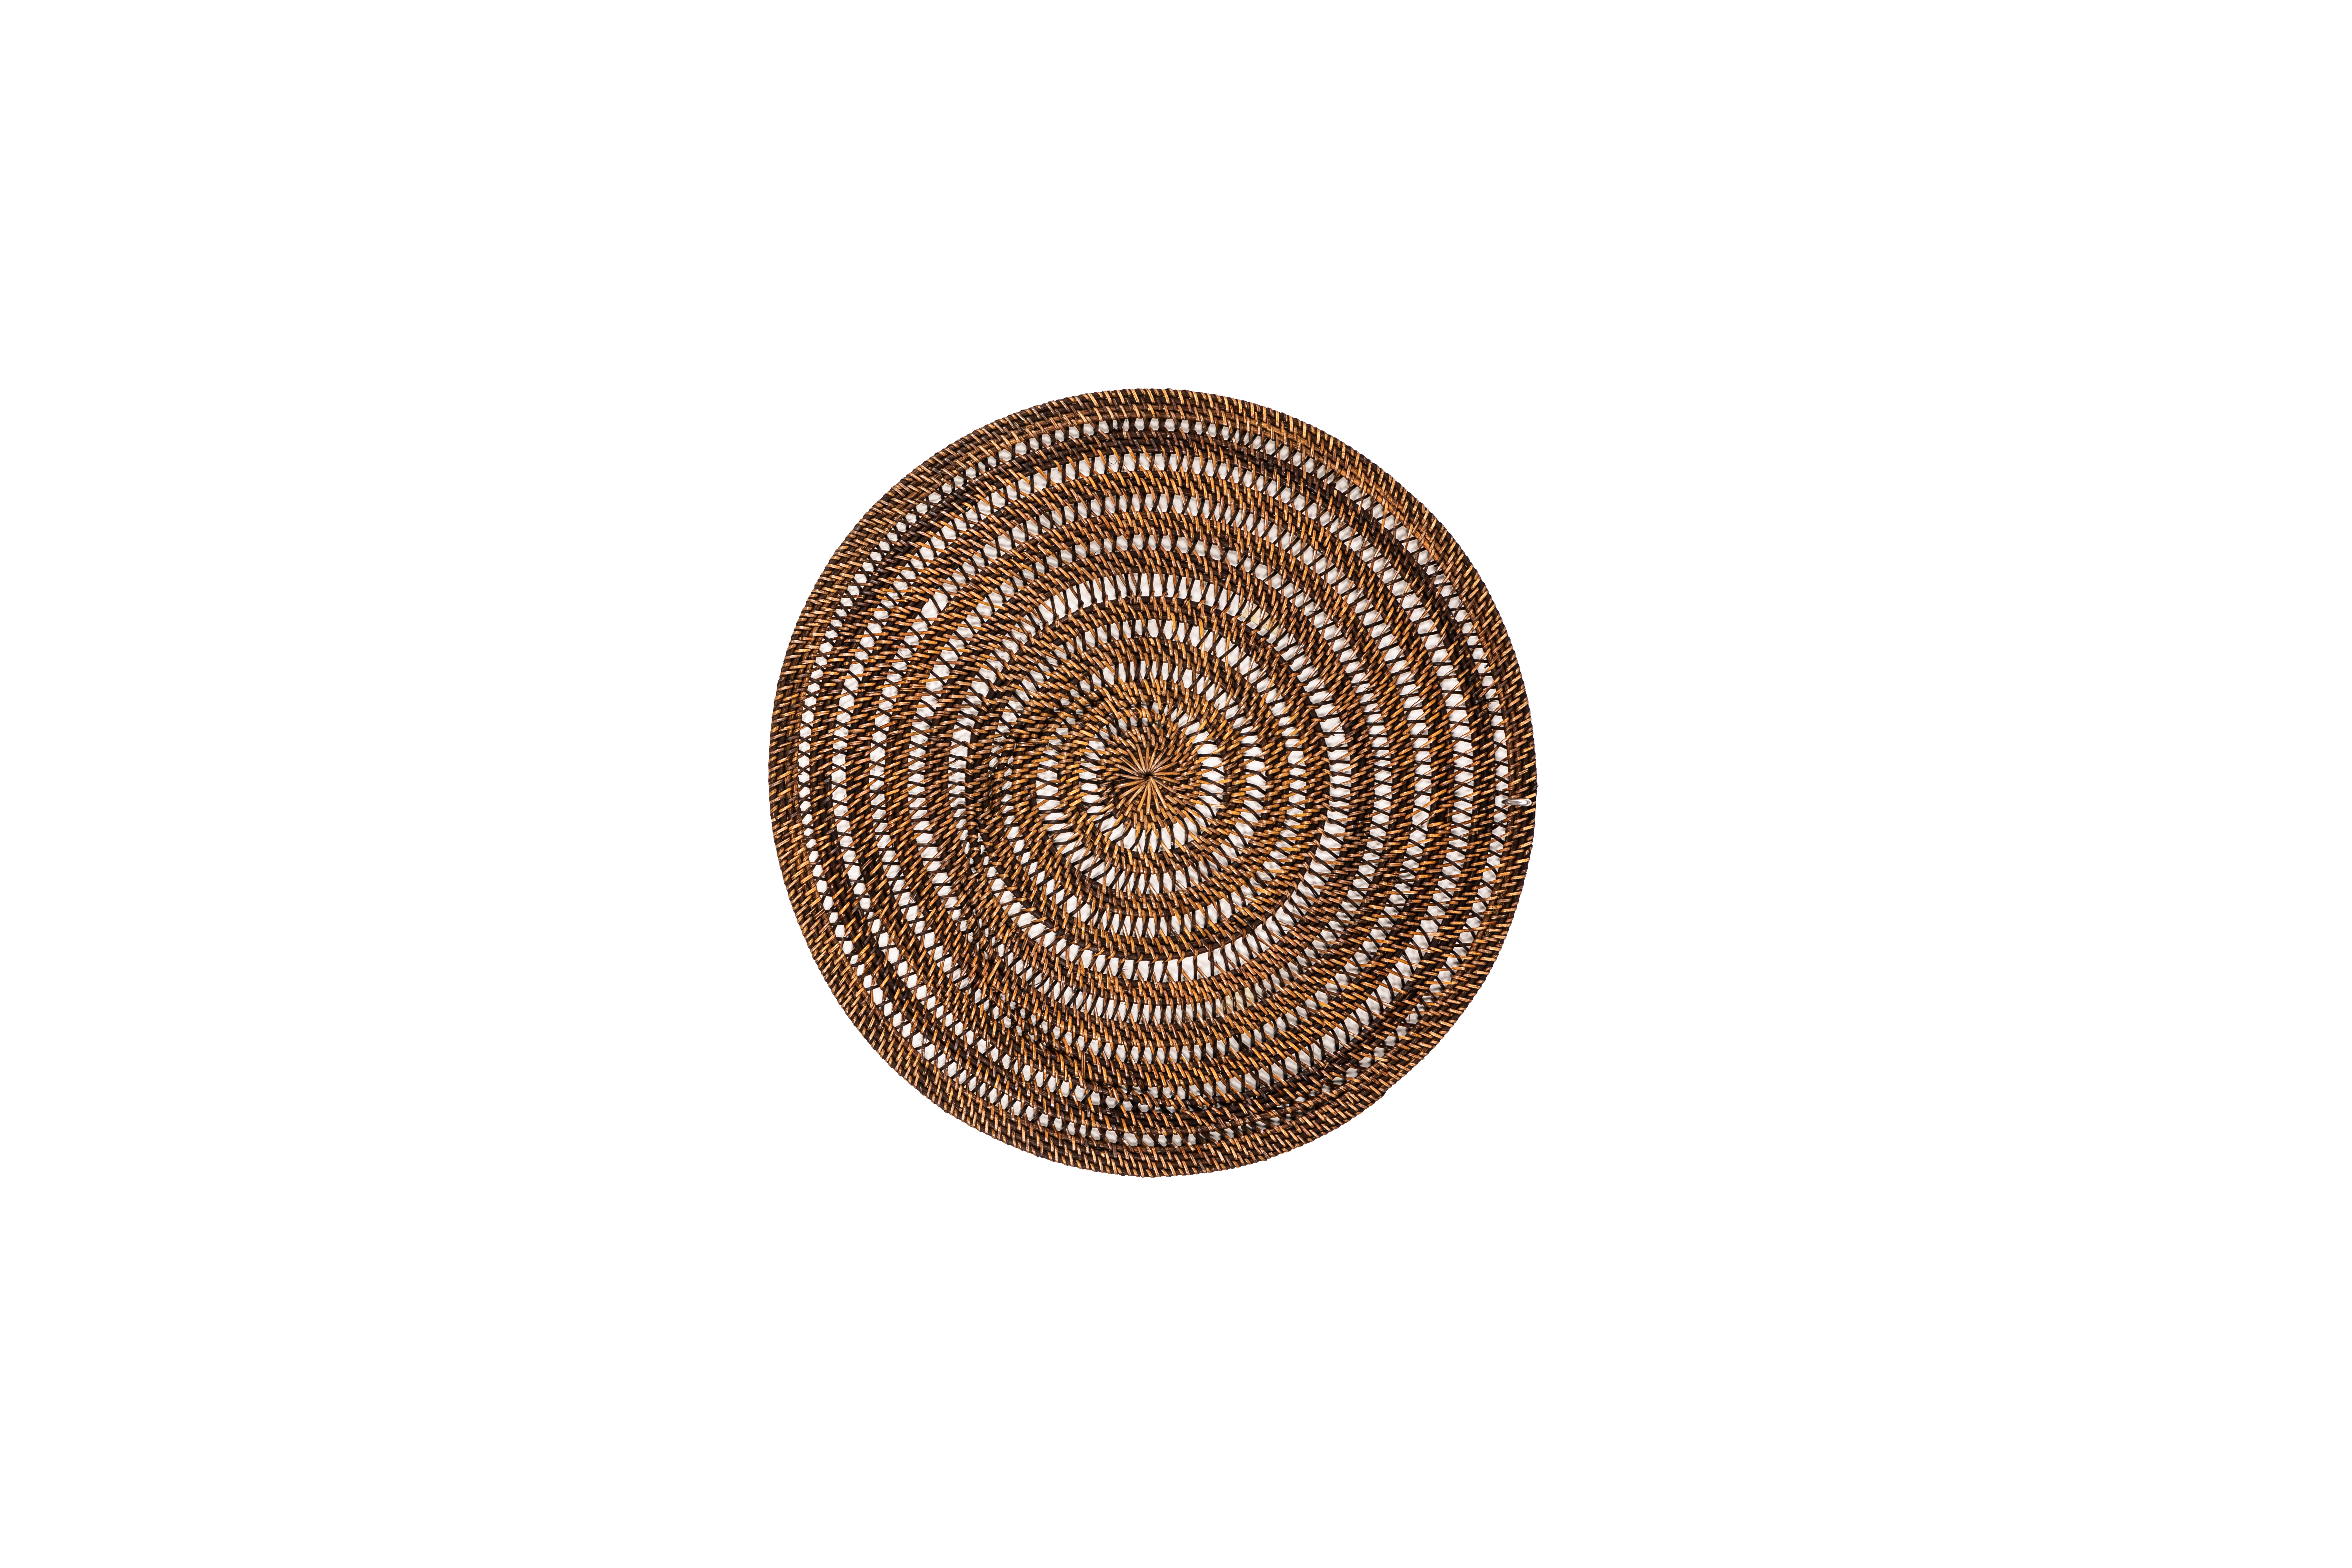 Decoratie rattan, rond - dia 60 cm - SPIRAL, donkerbruin